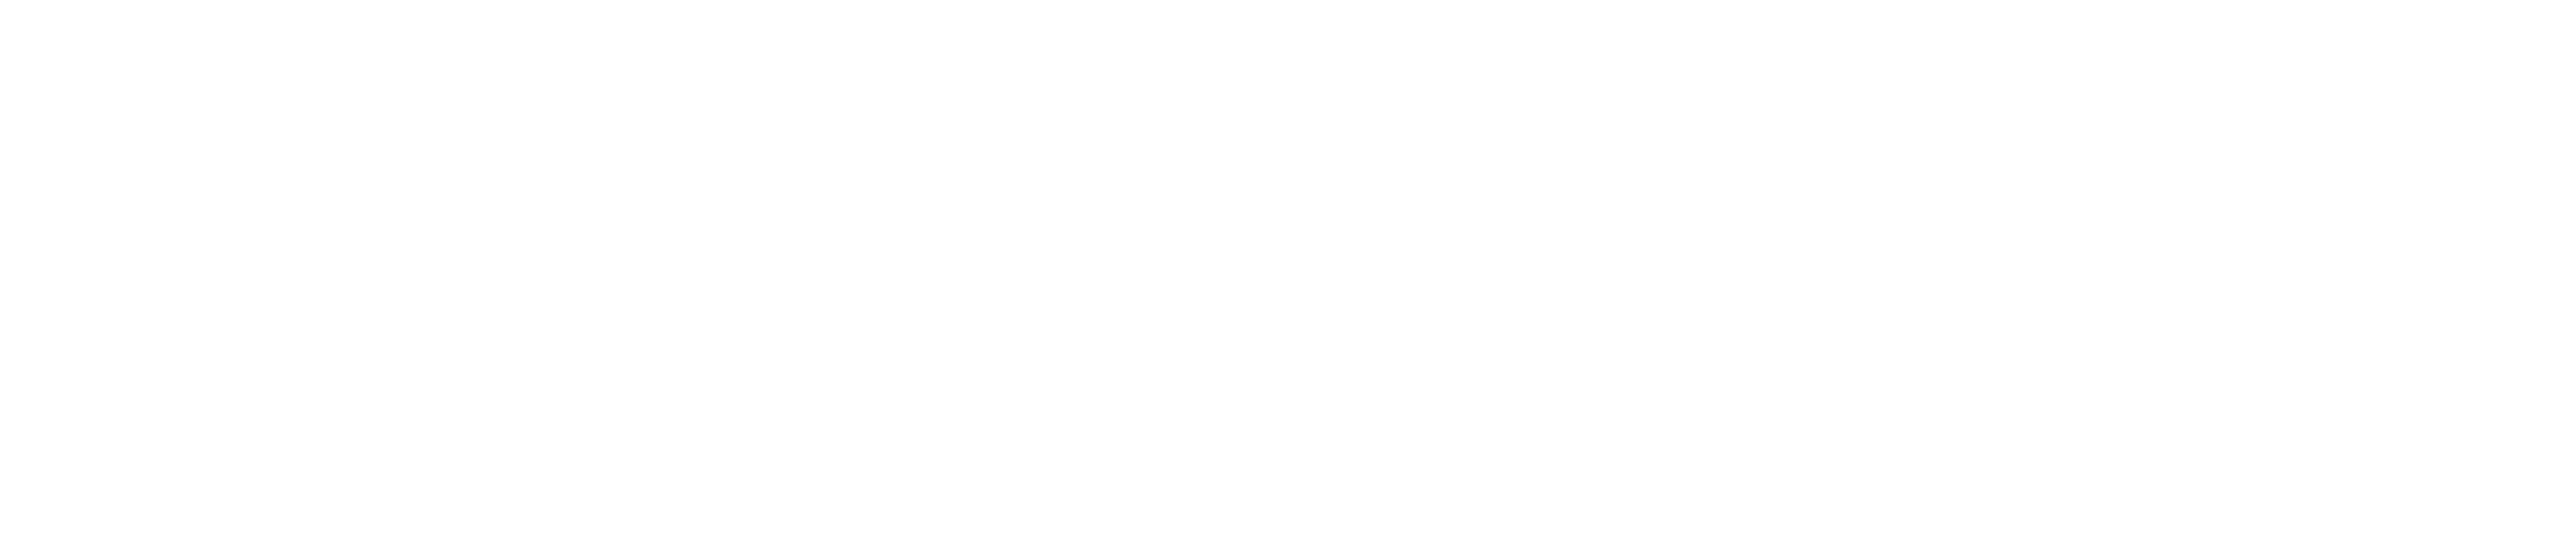 BY_ZUID_logo_white_01